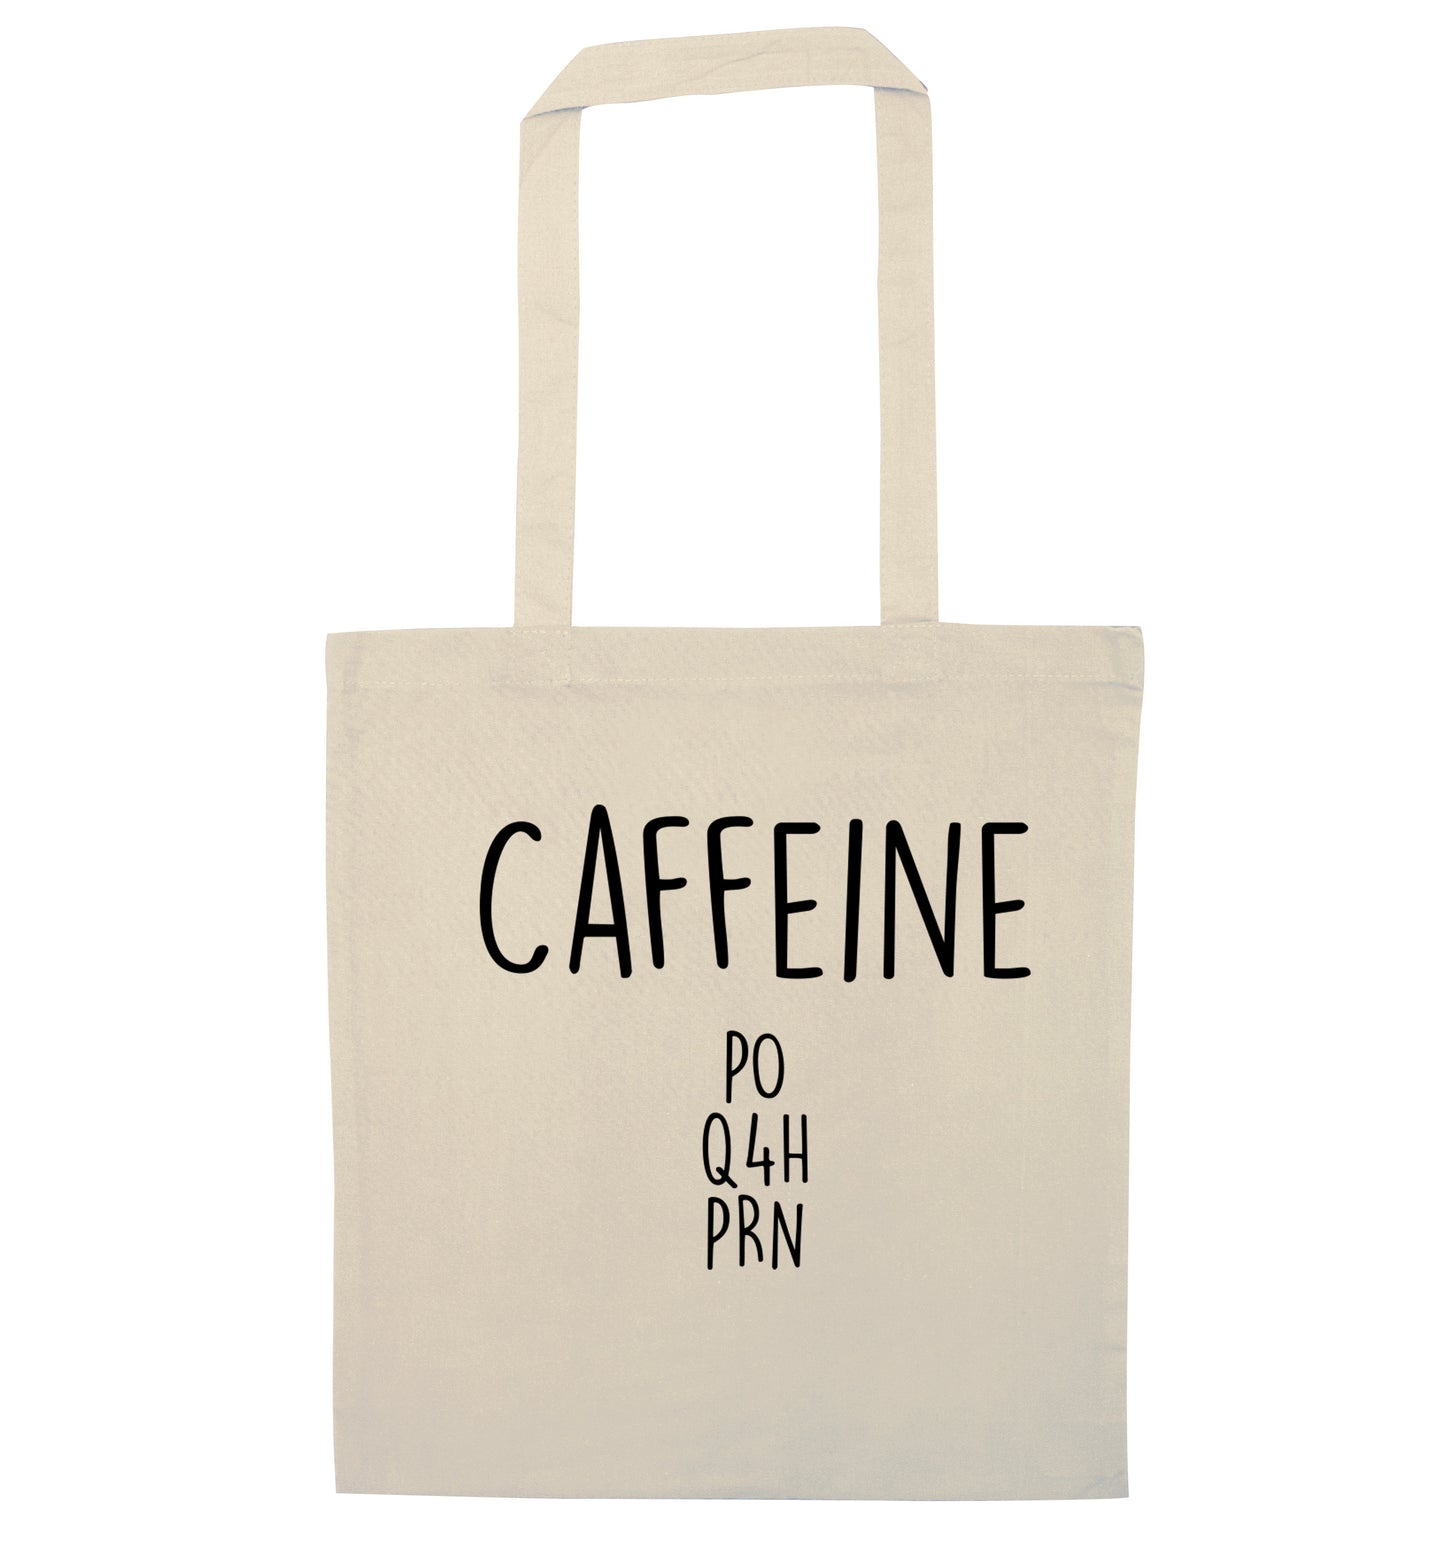 Caffeine PO Q4H PRN natural tote bag